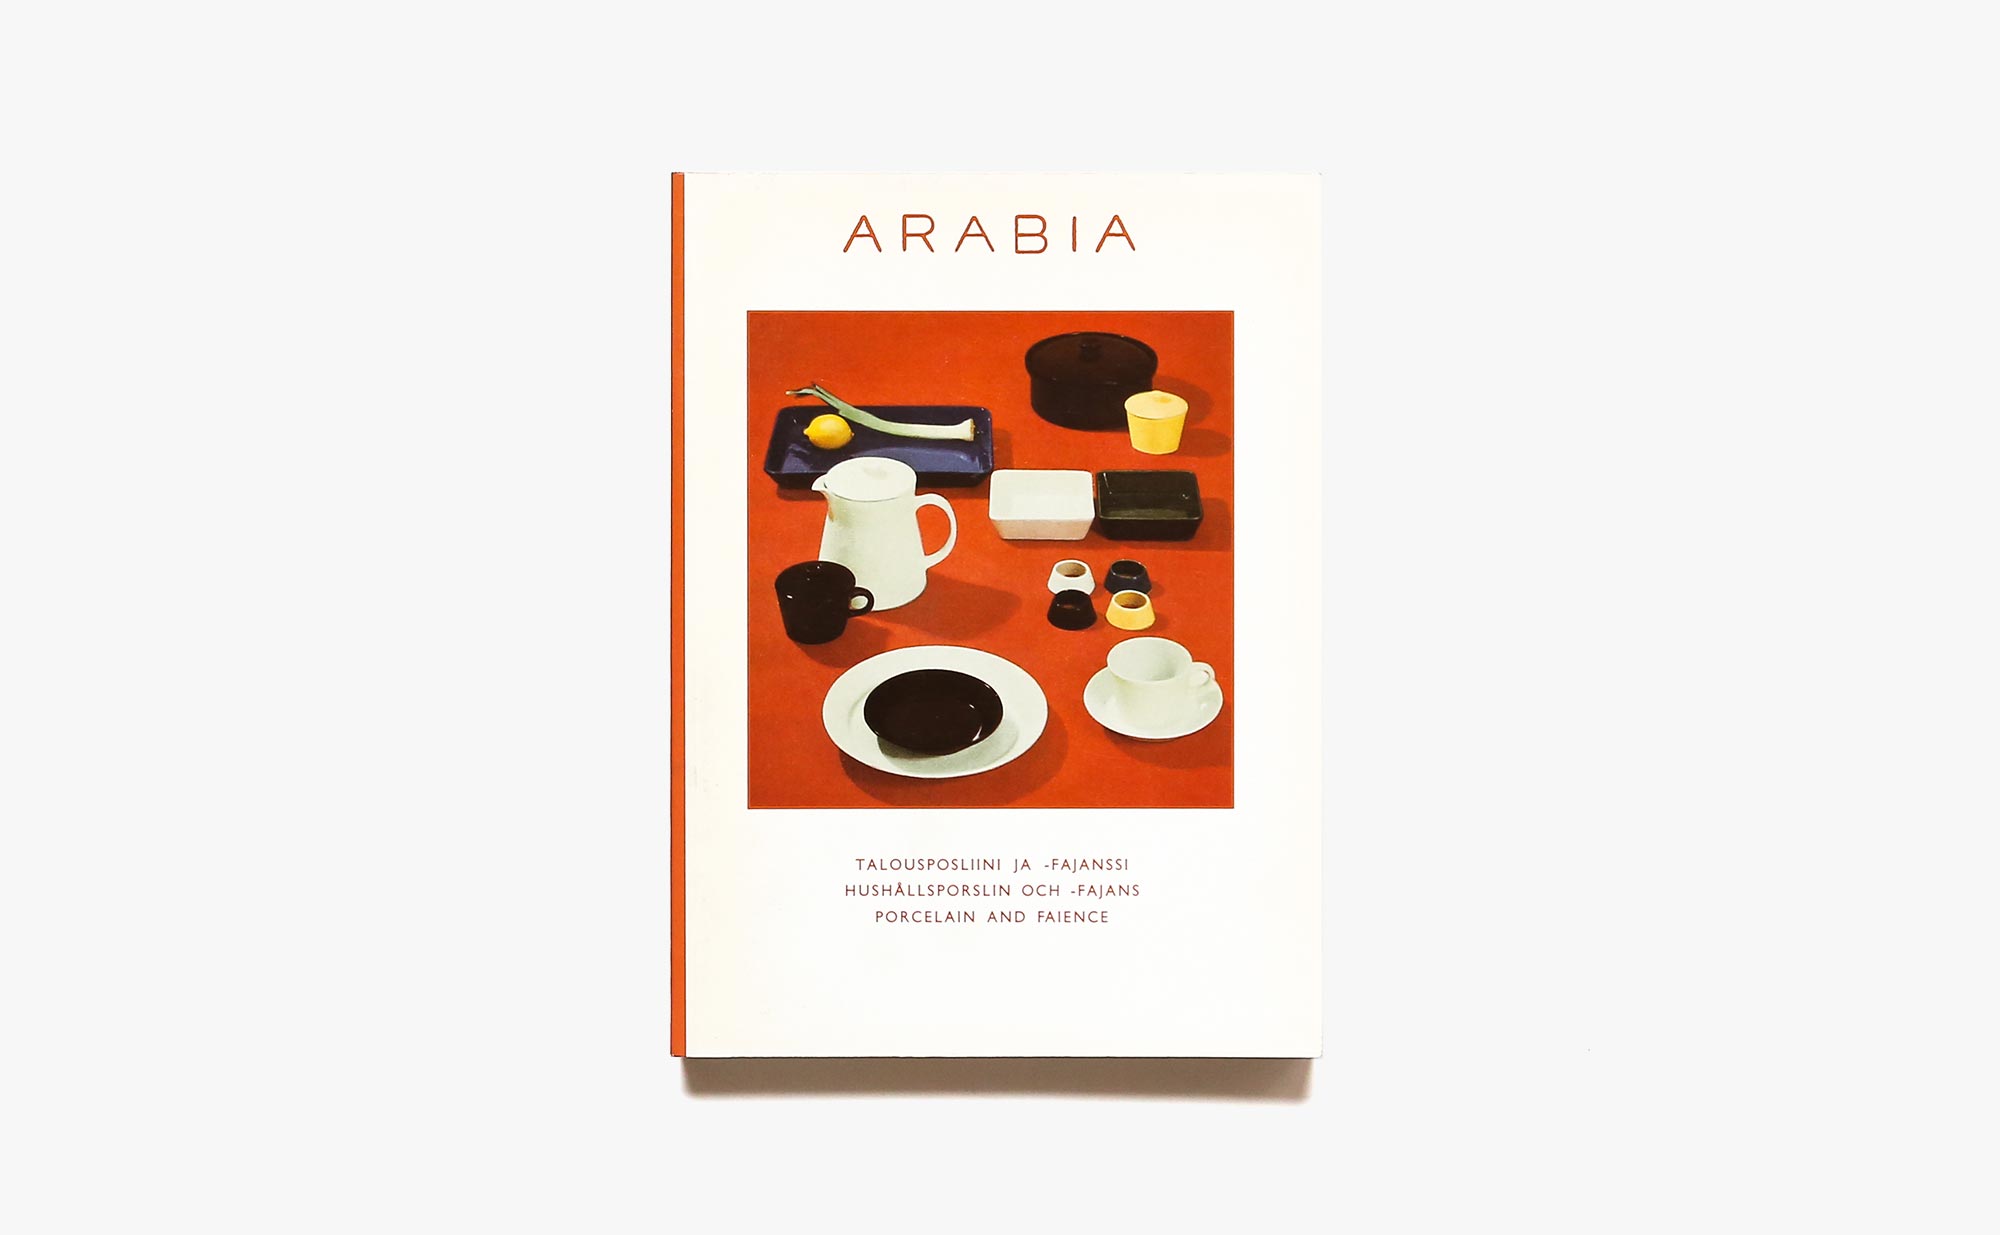 Arabia: Porcelain and Faience